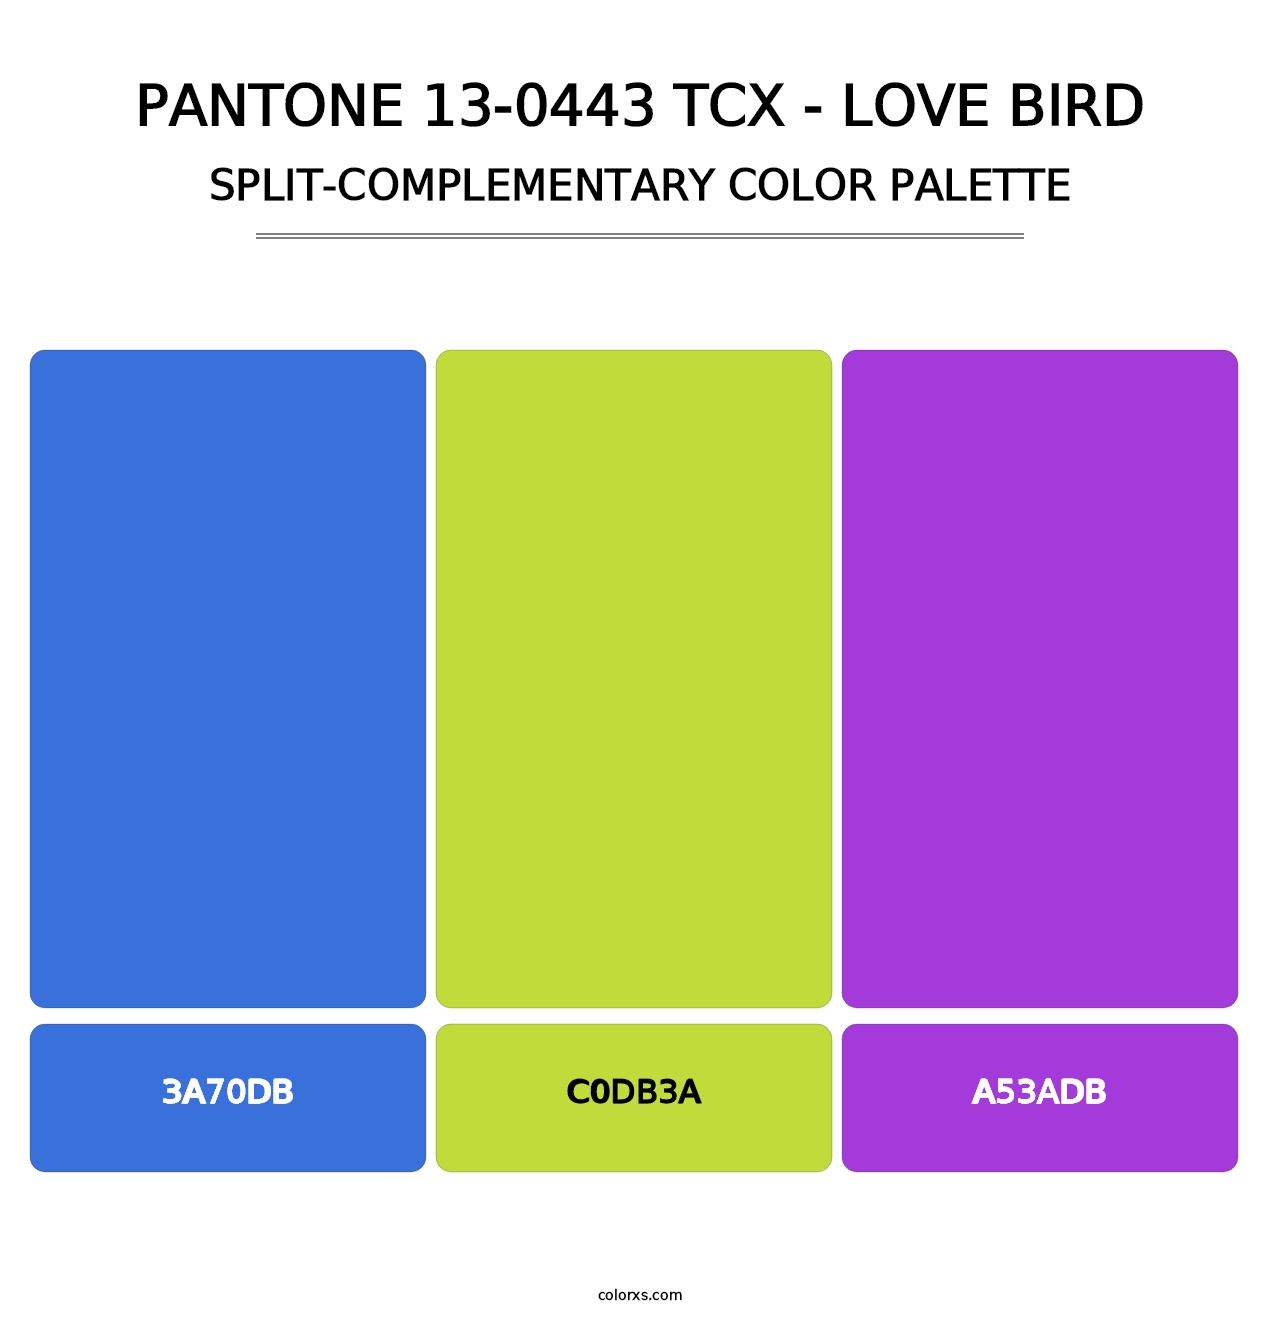 PANTONE 13-0443 TCX - Love Bird - Split-Complementary Color Palette